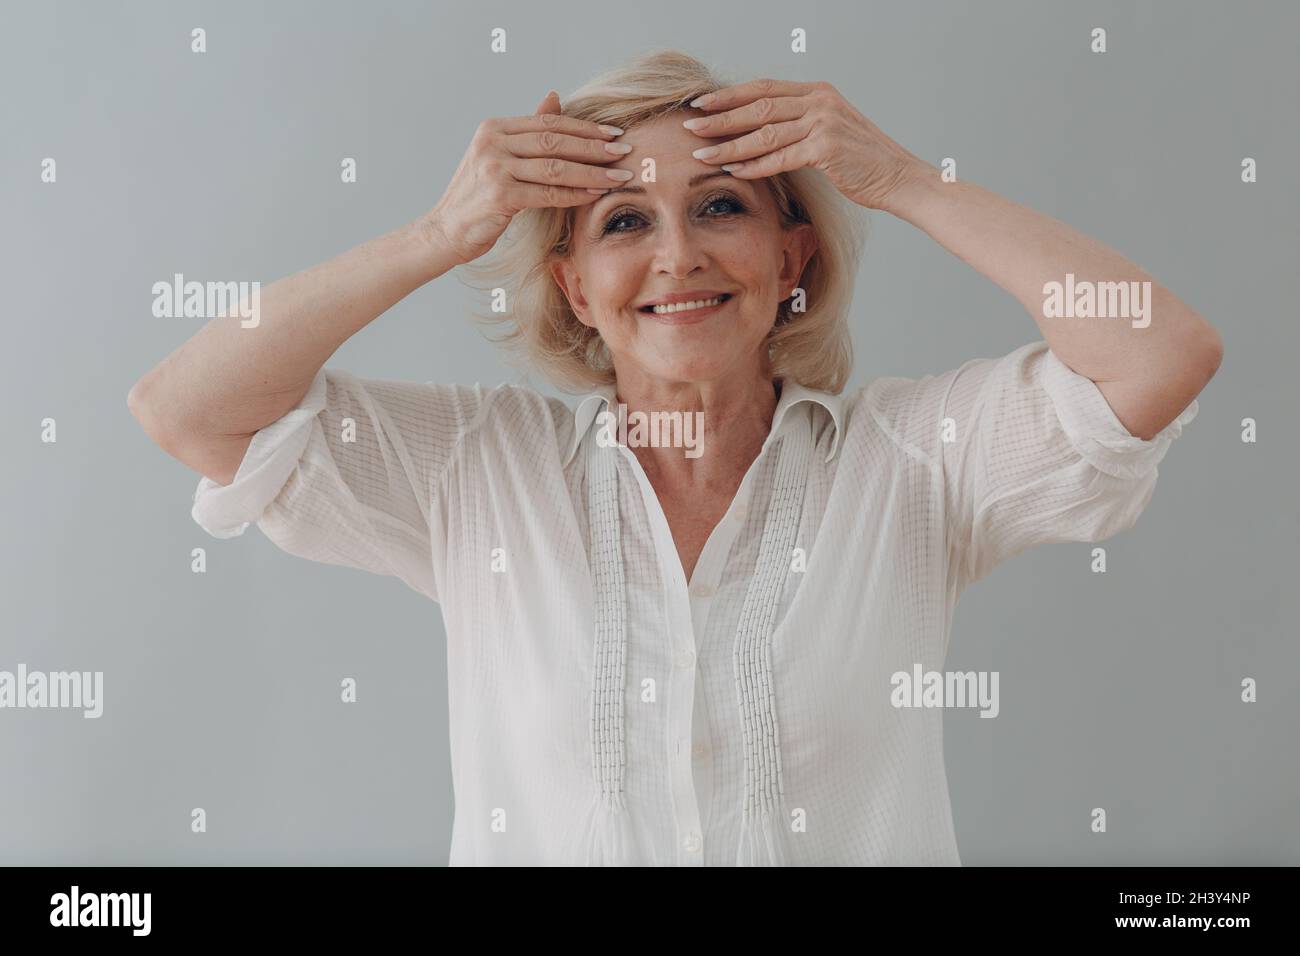 Ältere kaukasische alte Frau grauhaarige Porträt tun facebouding Yoga Gesicht Gymnastik Yoga Selbstmassage. Stockfoto